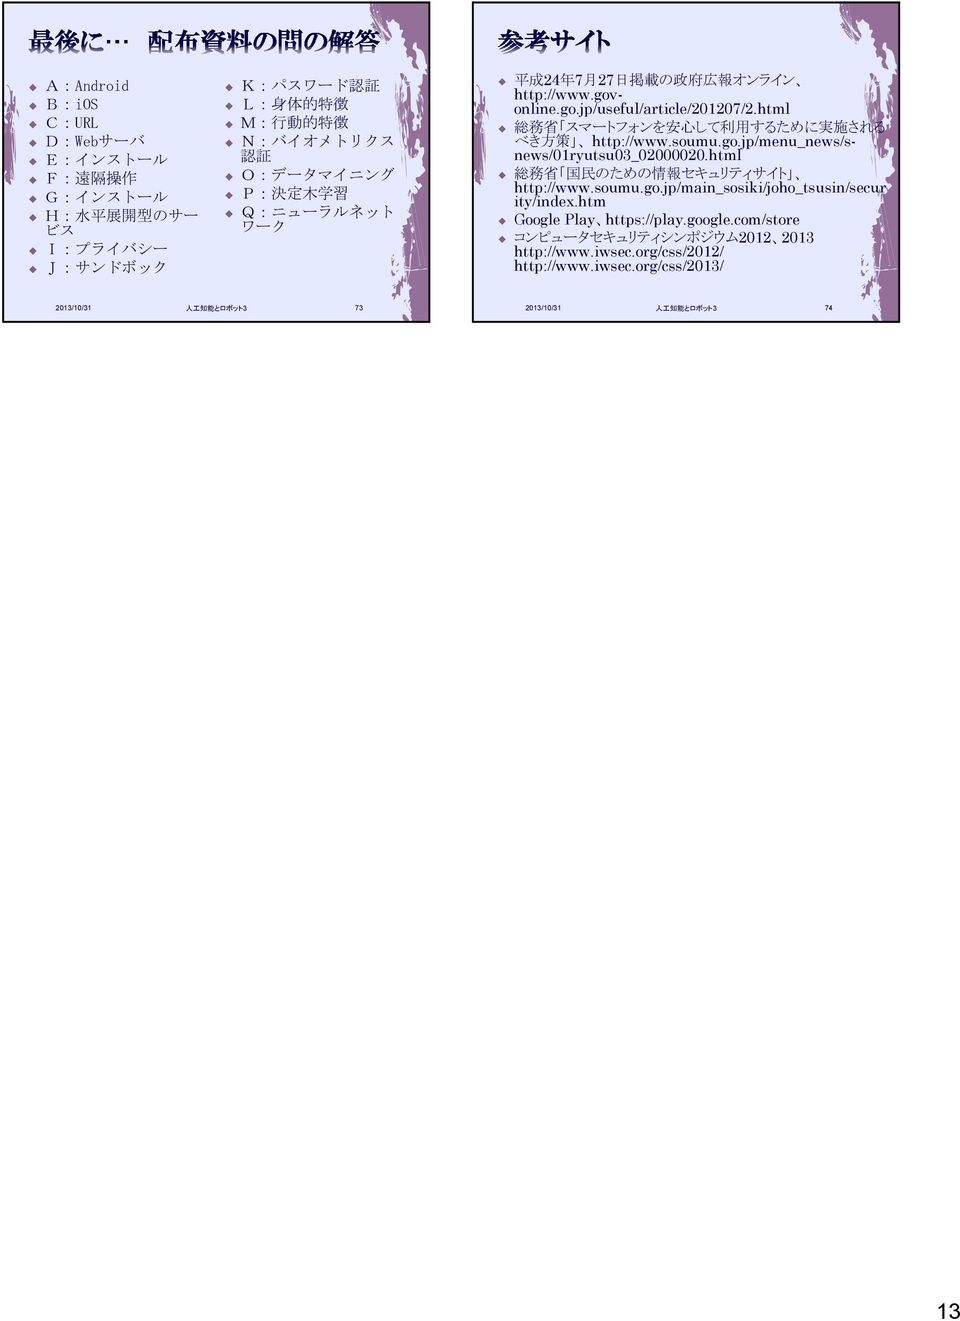 html 総 務 省 スマートフォンを 安 心 して 利 用 するために 実 施 される べき 方 策 http://www.soumu.go.jp/menu_news/snews/1ryutsu3_22.html 総 務 省 国 民 のための 情 報 セキュリティサイト http://www.soumu.go.jp/main_sosiki/joho_tsusin/secur ity/index.